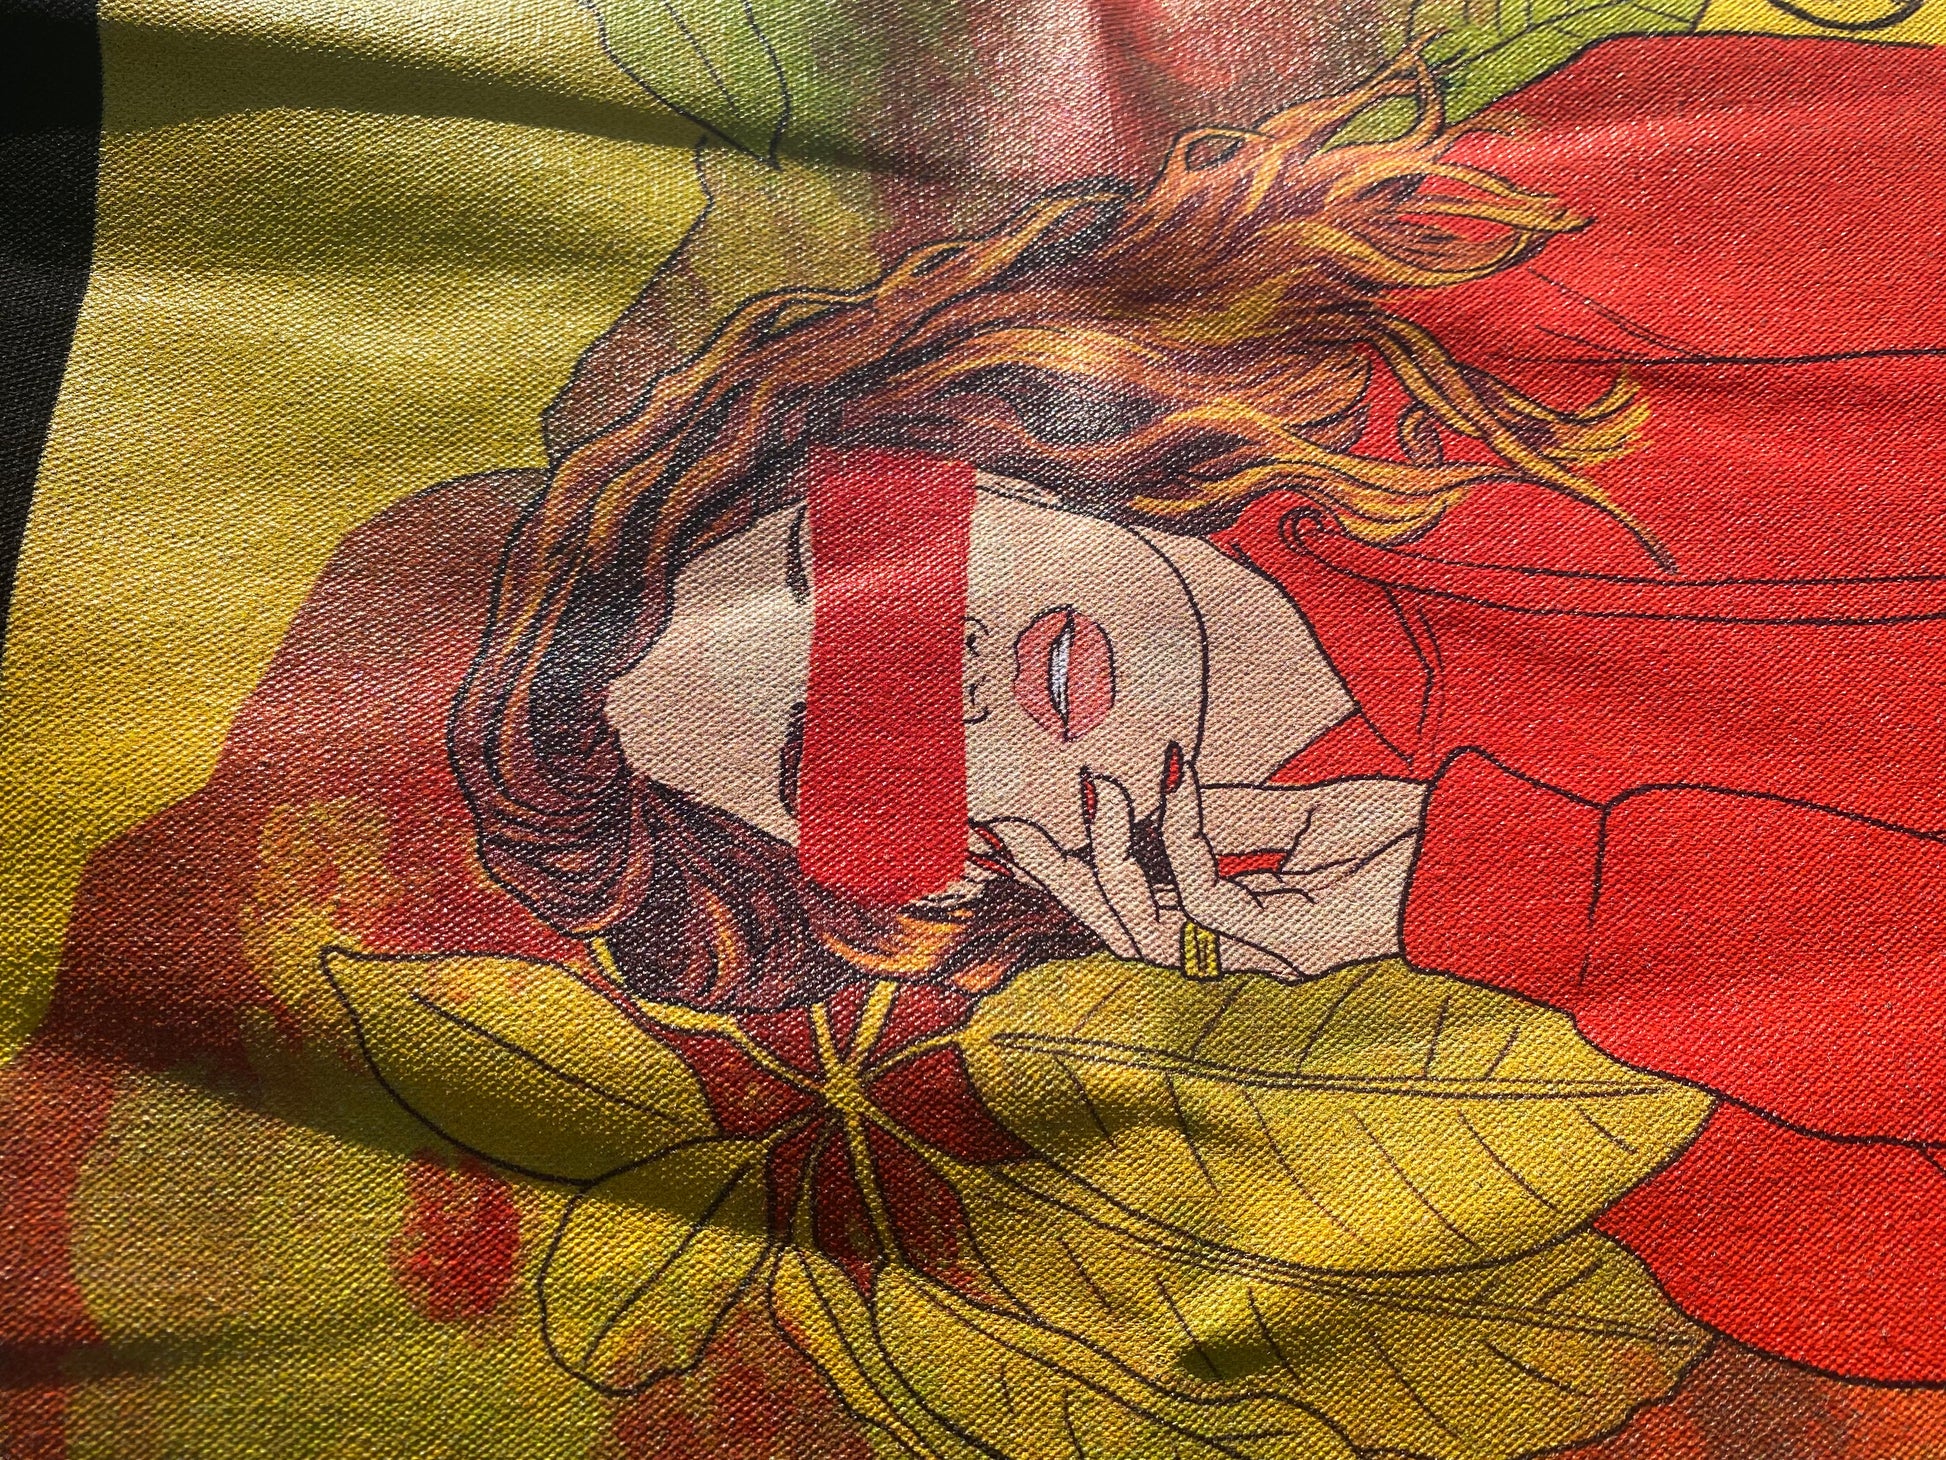 MIA Digital Art tote bag from Leonora, print it on a fine sweatshirt in good quality! Reggae and Dancehall Art prints!